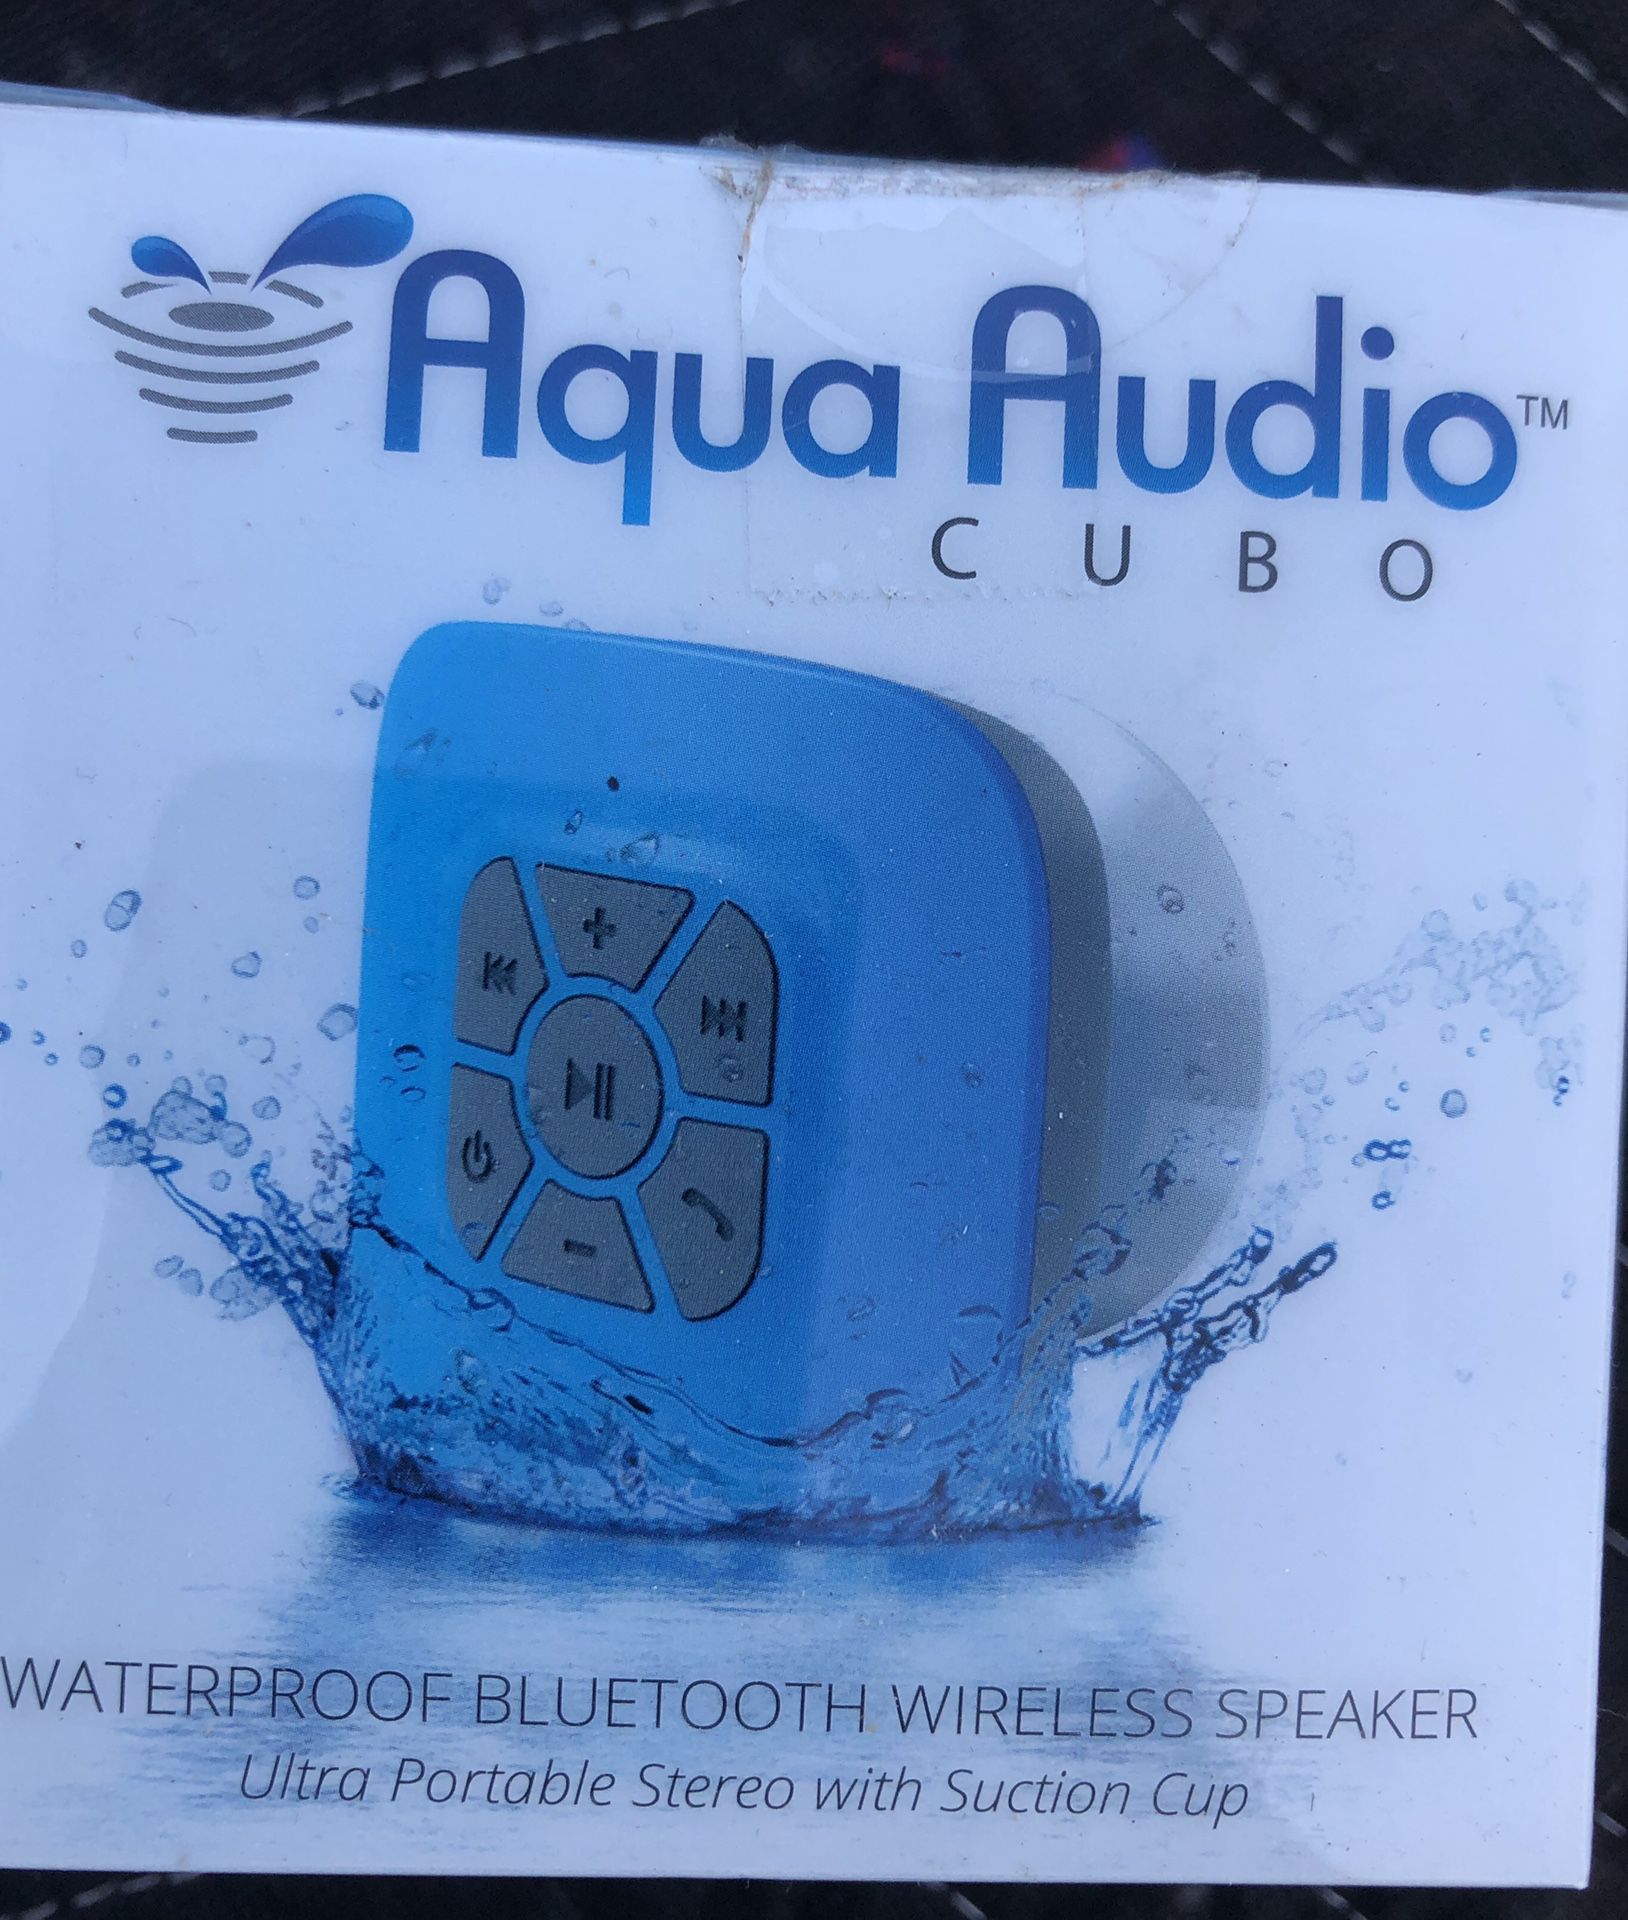 Aqua audio cube waterproof Bluetooth speaker